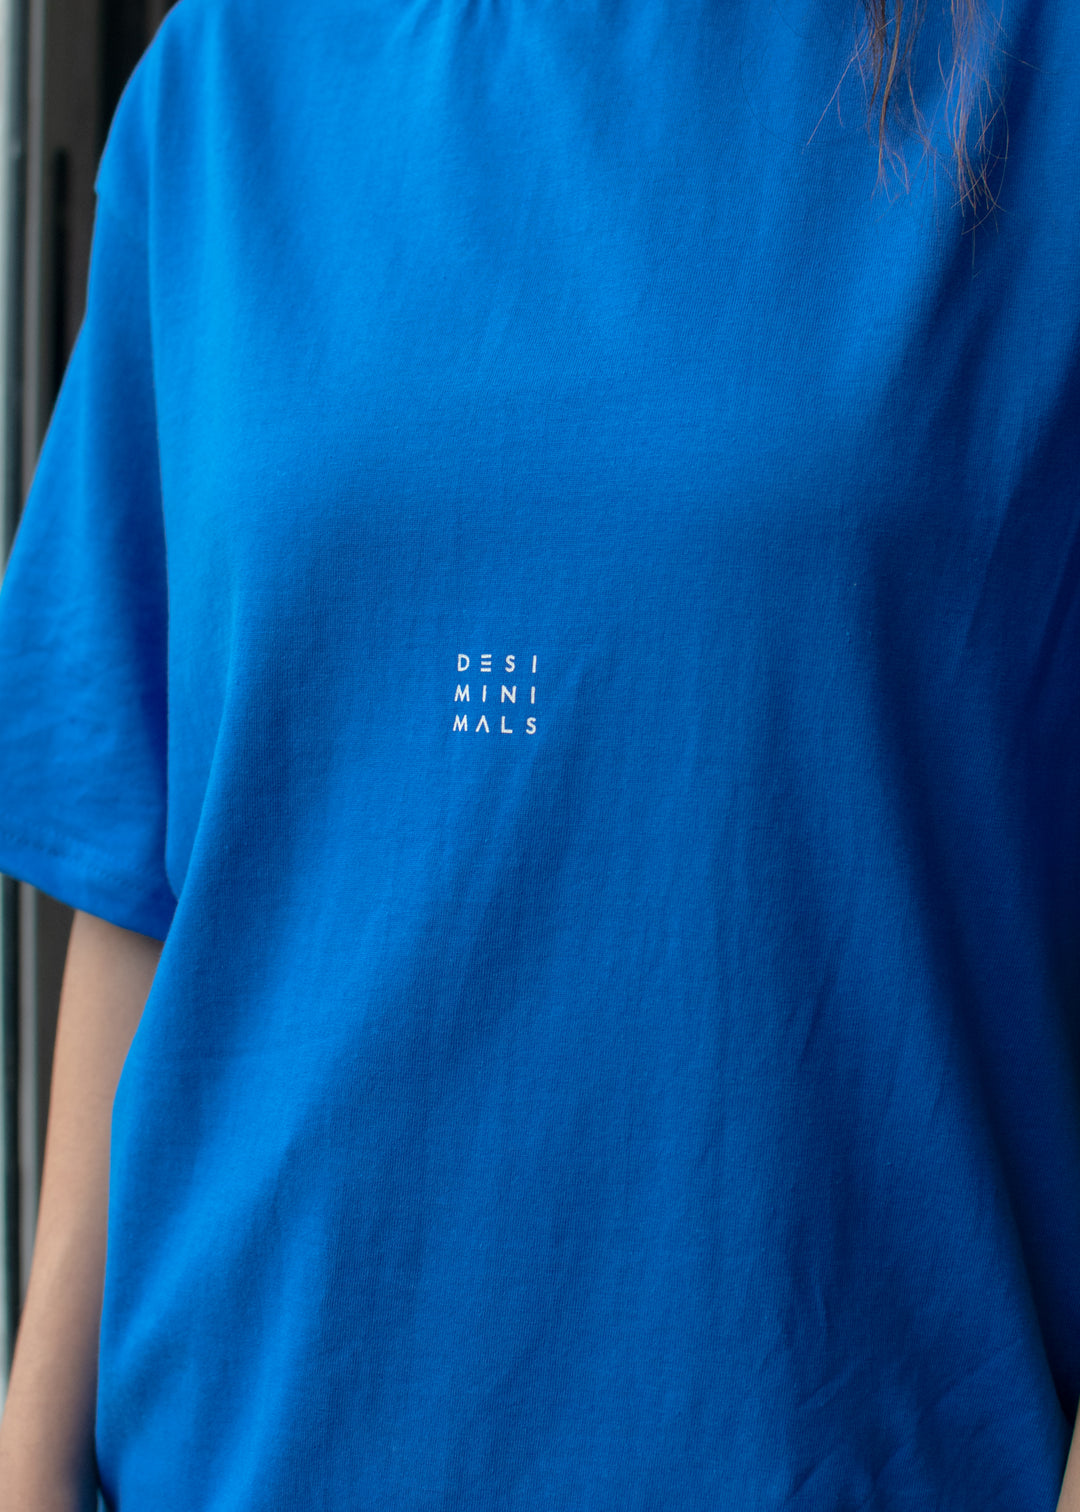 Creating The Life — Cobalt Blue T-Shirt